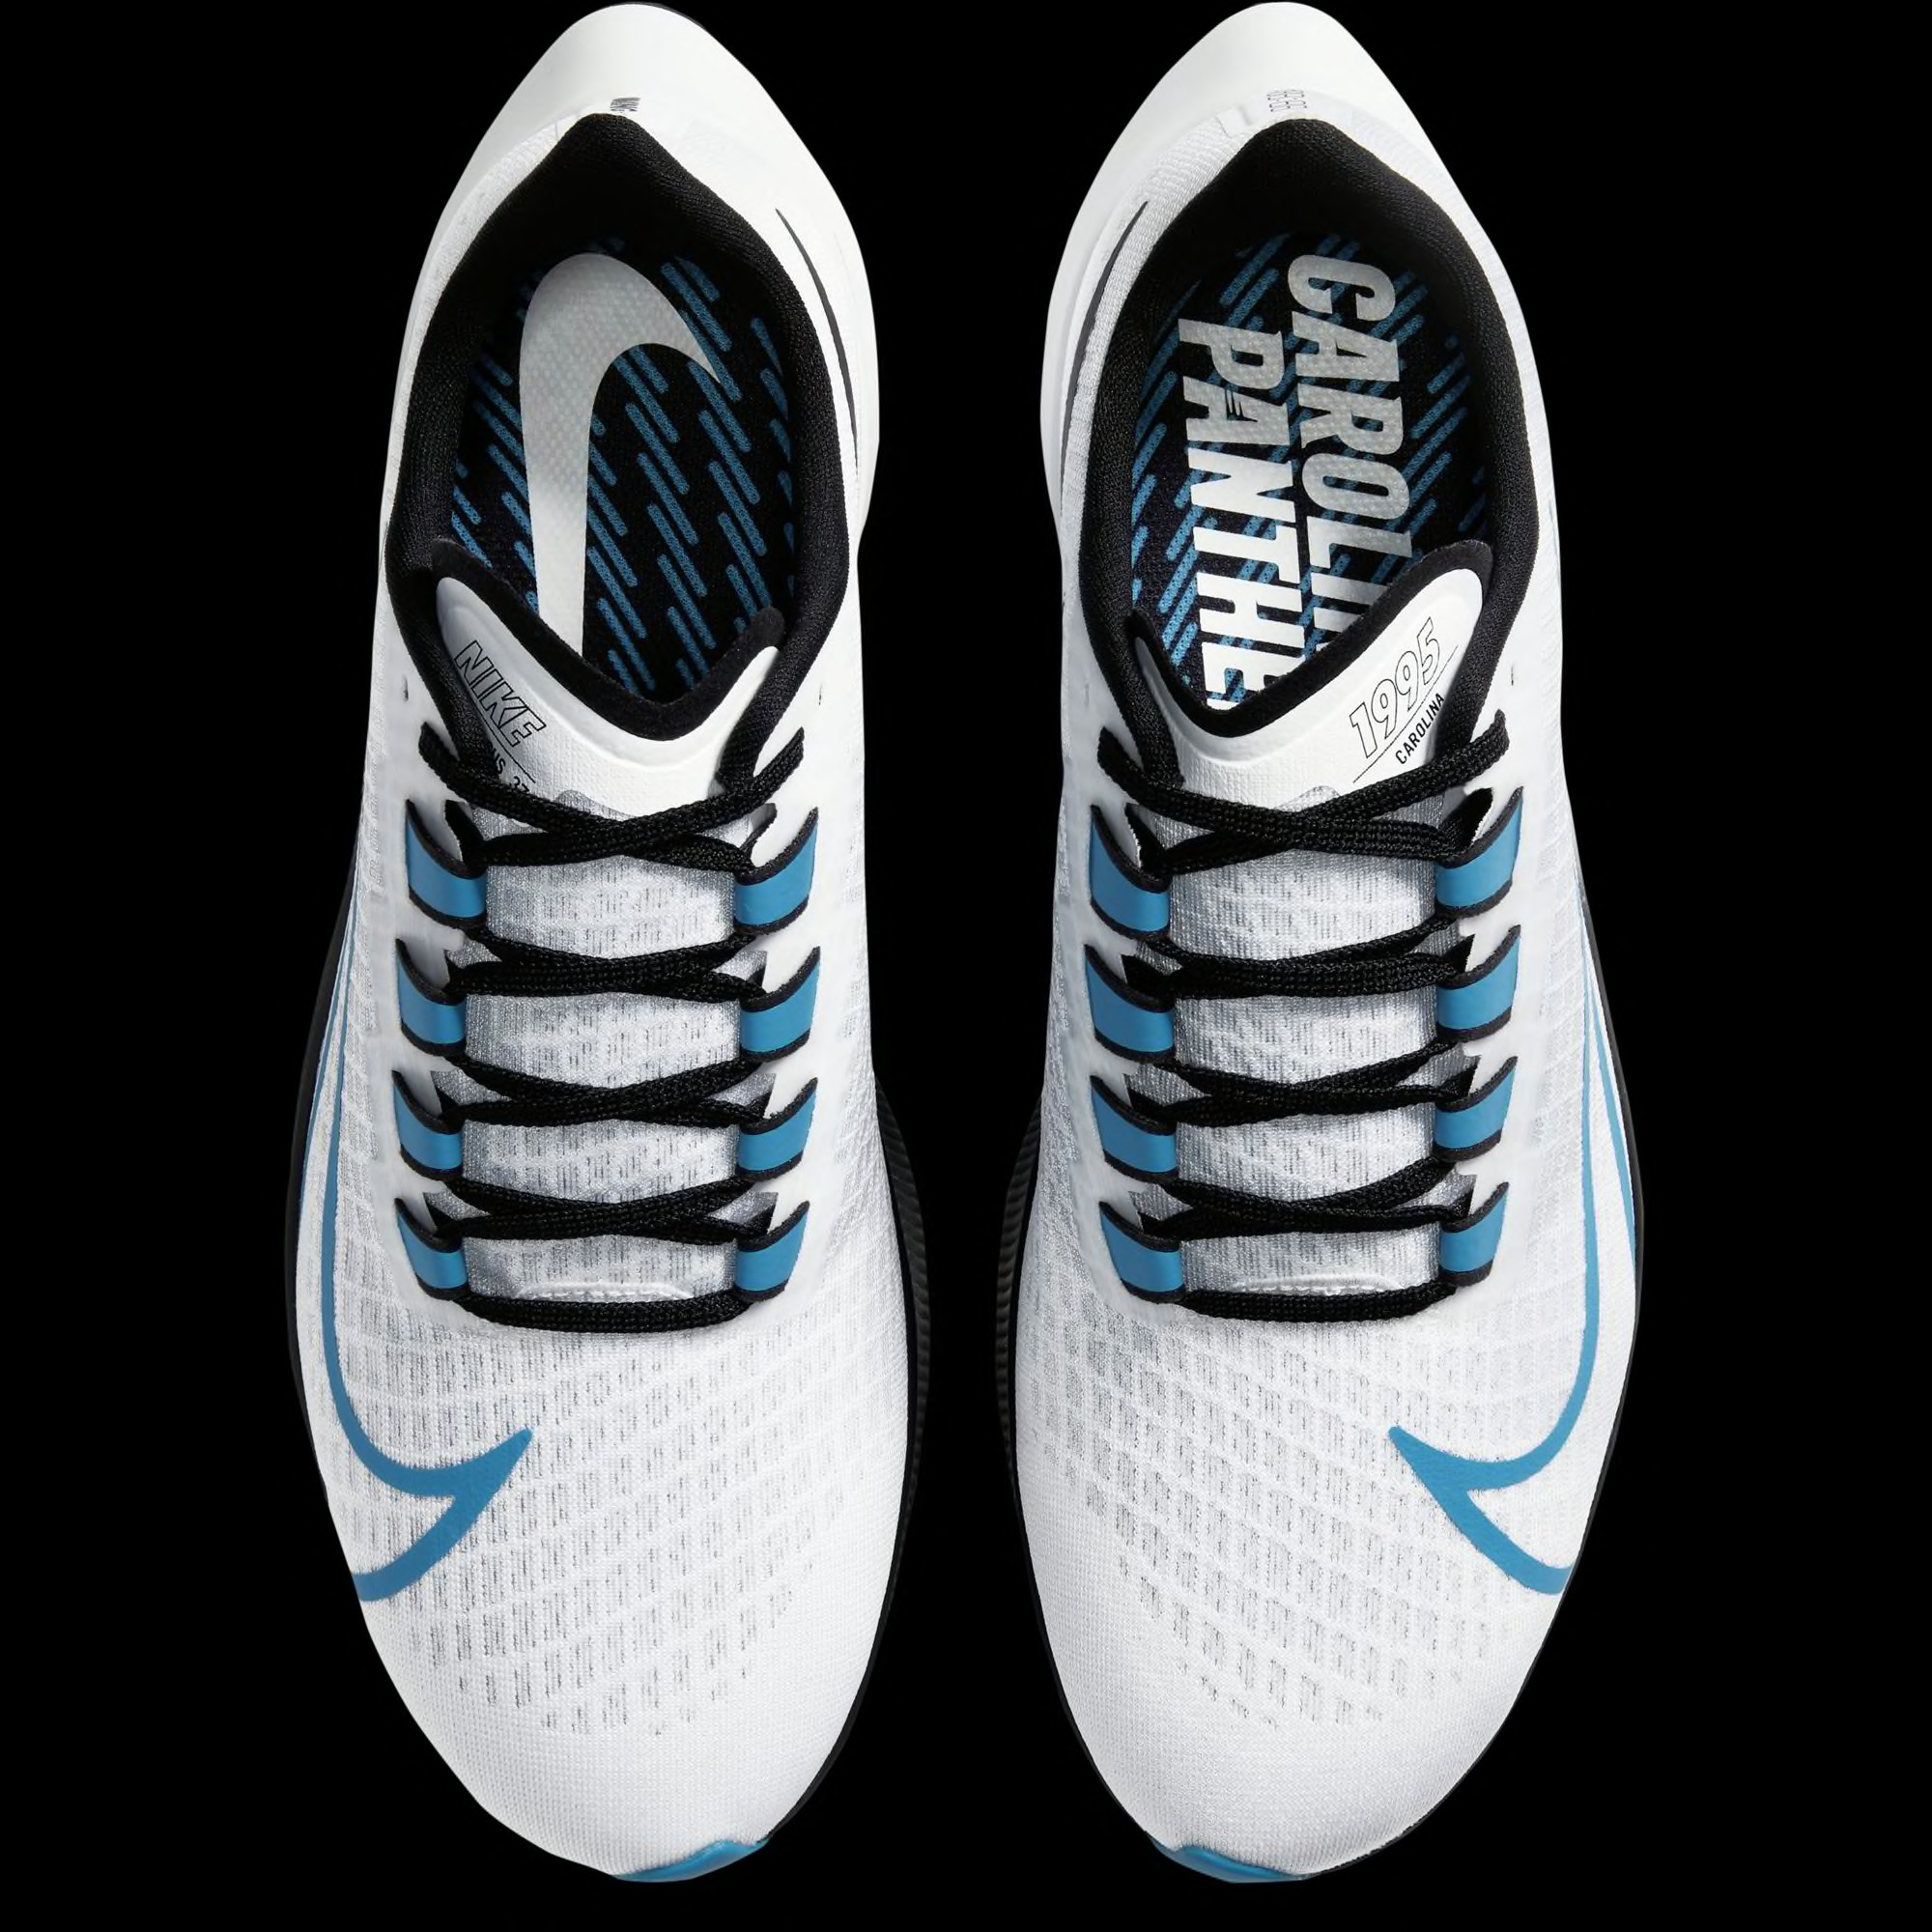 These new Carolina Panthers Nike shoes 